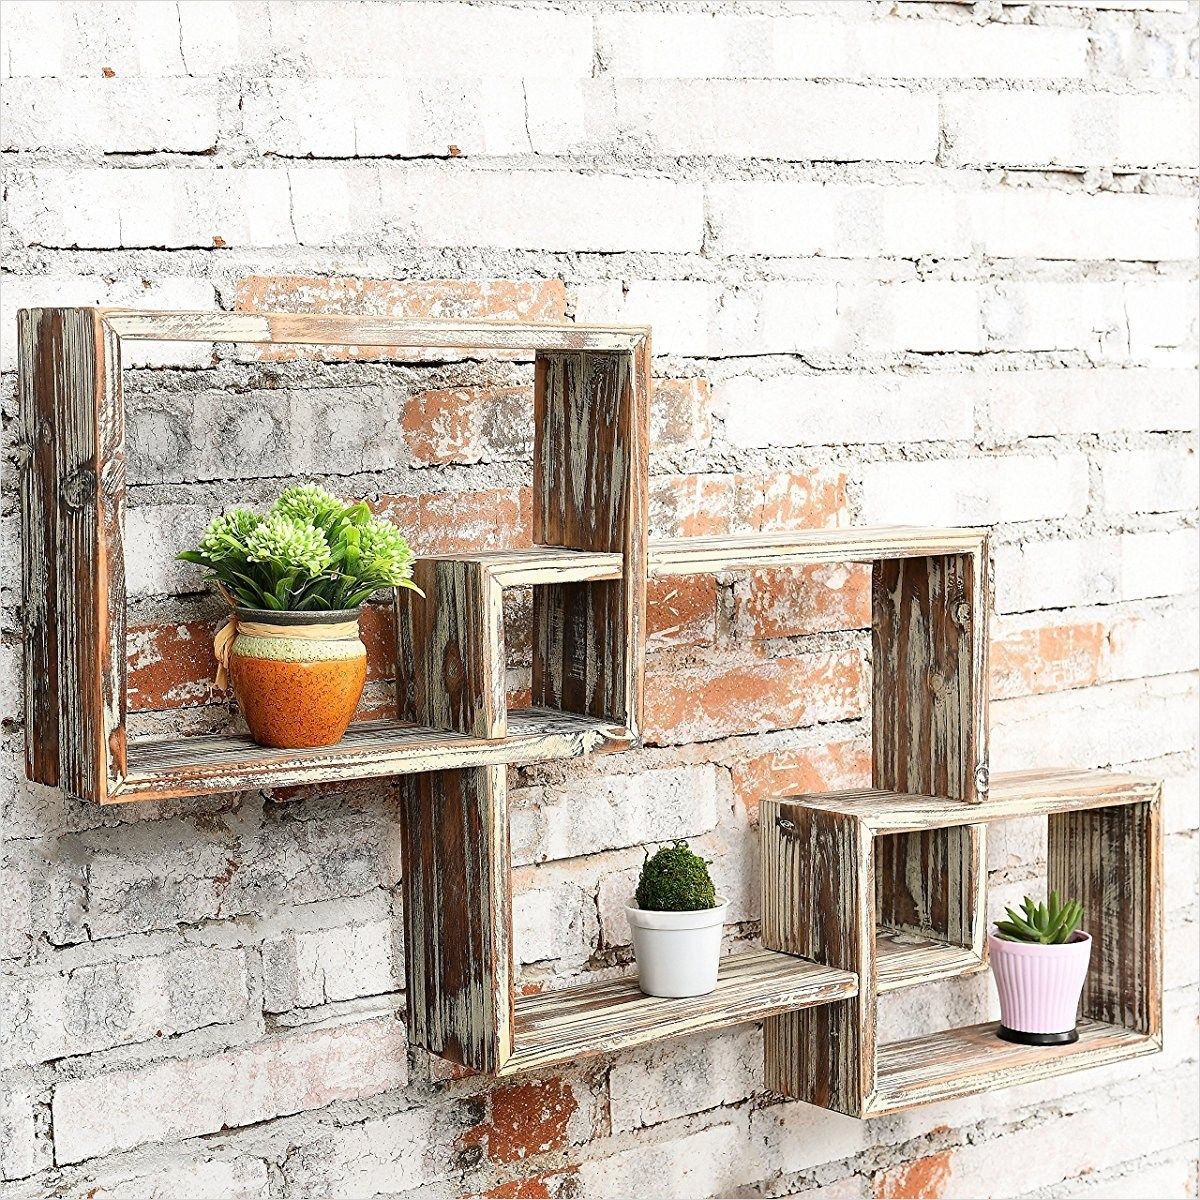 Rustic Wooden Shelves For Farmhouse style Decor